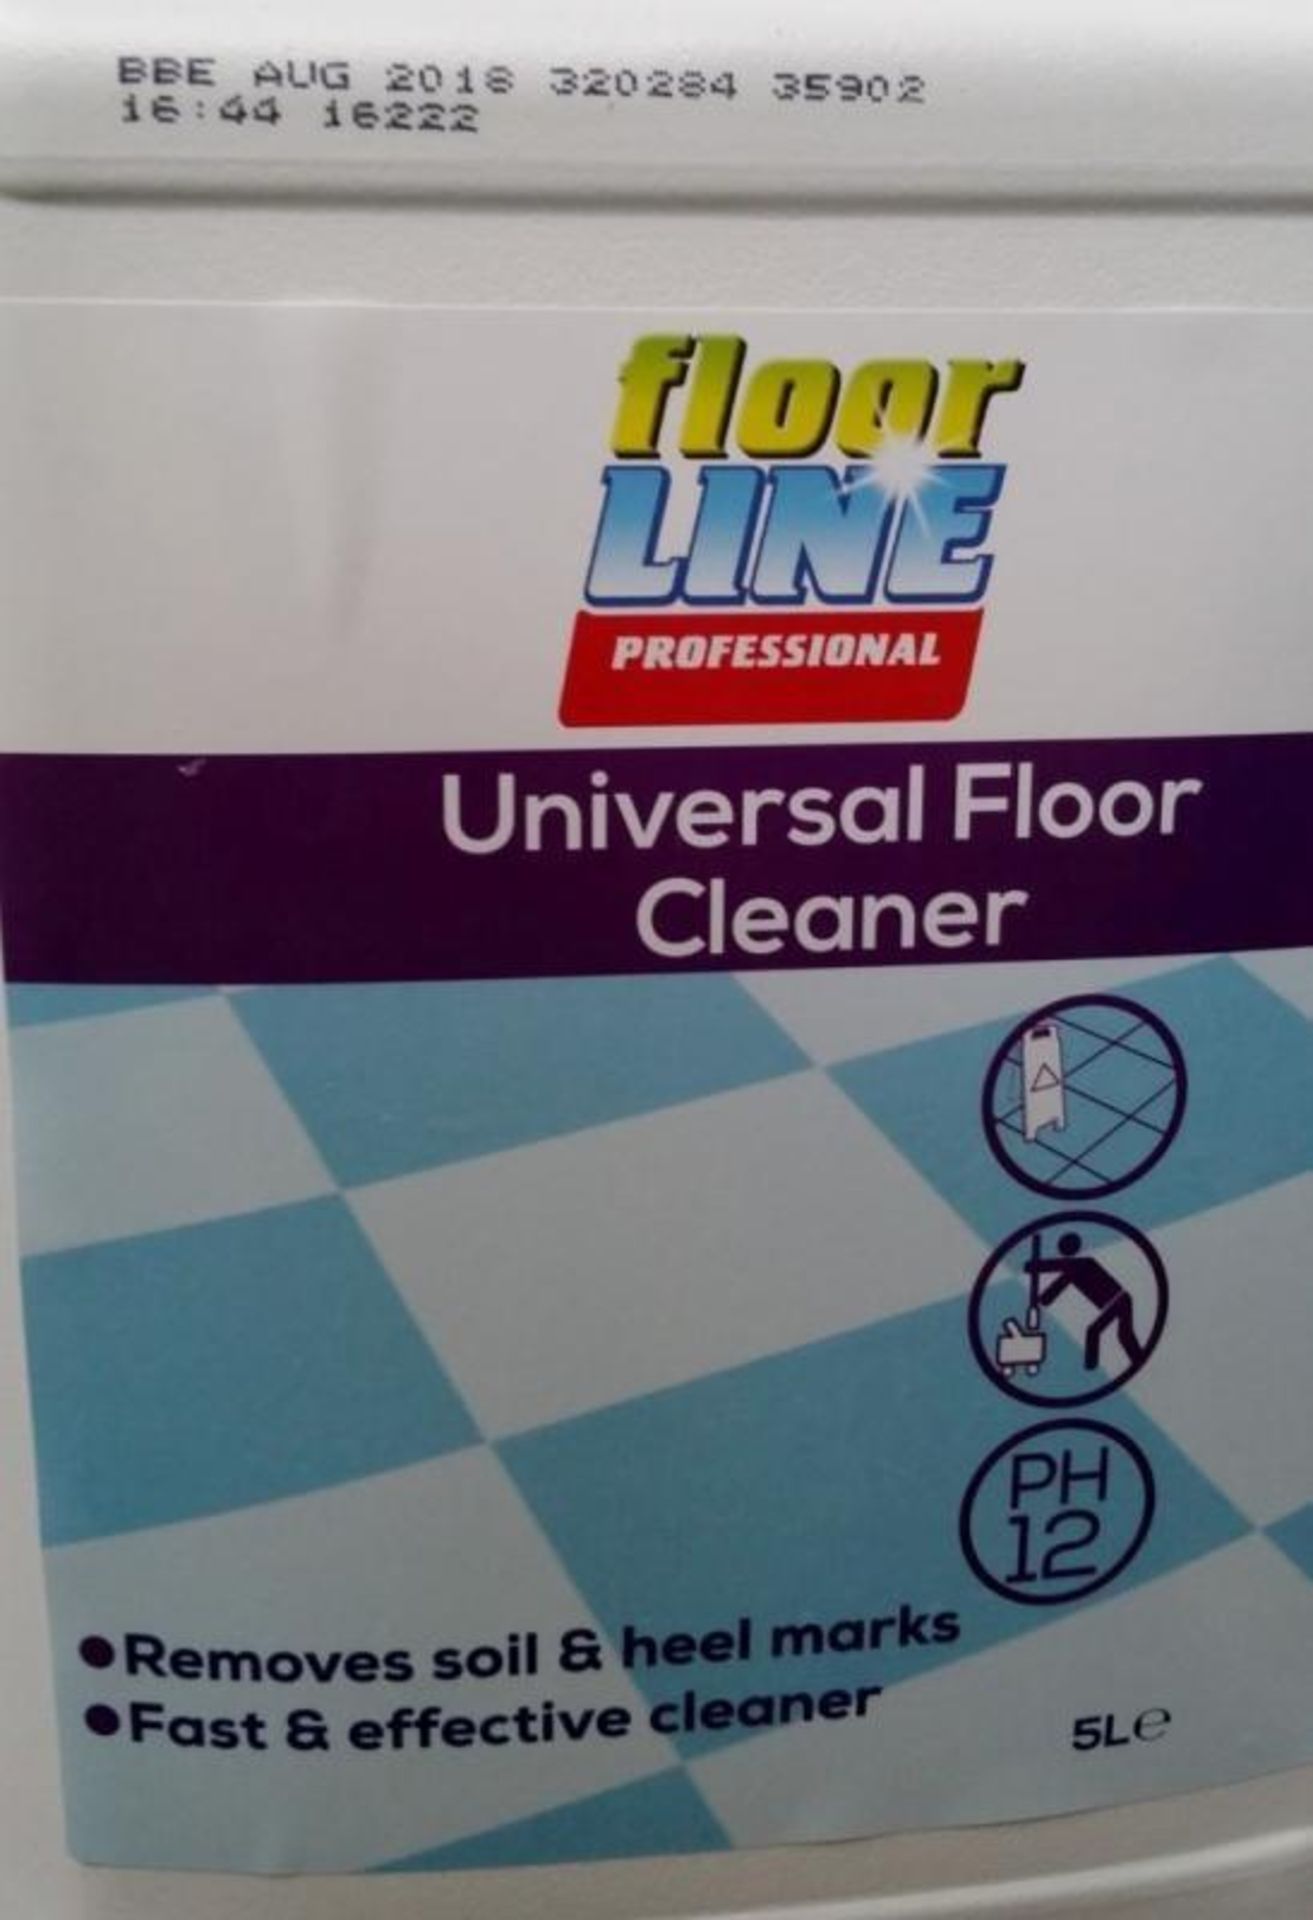 12 x Floor Line Professional 5 Litre Universal Floor Cleaner - Removes Soil & Heel Marks - Fast & - Image 3 of 7